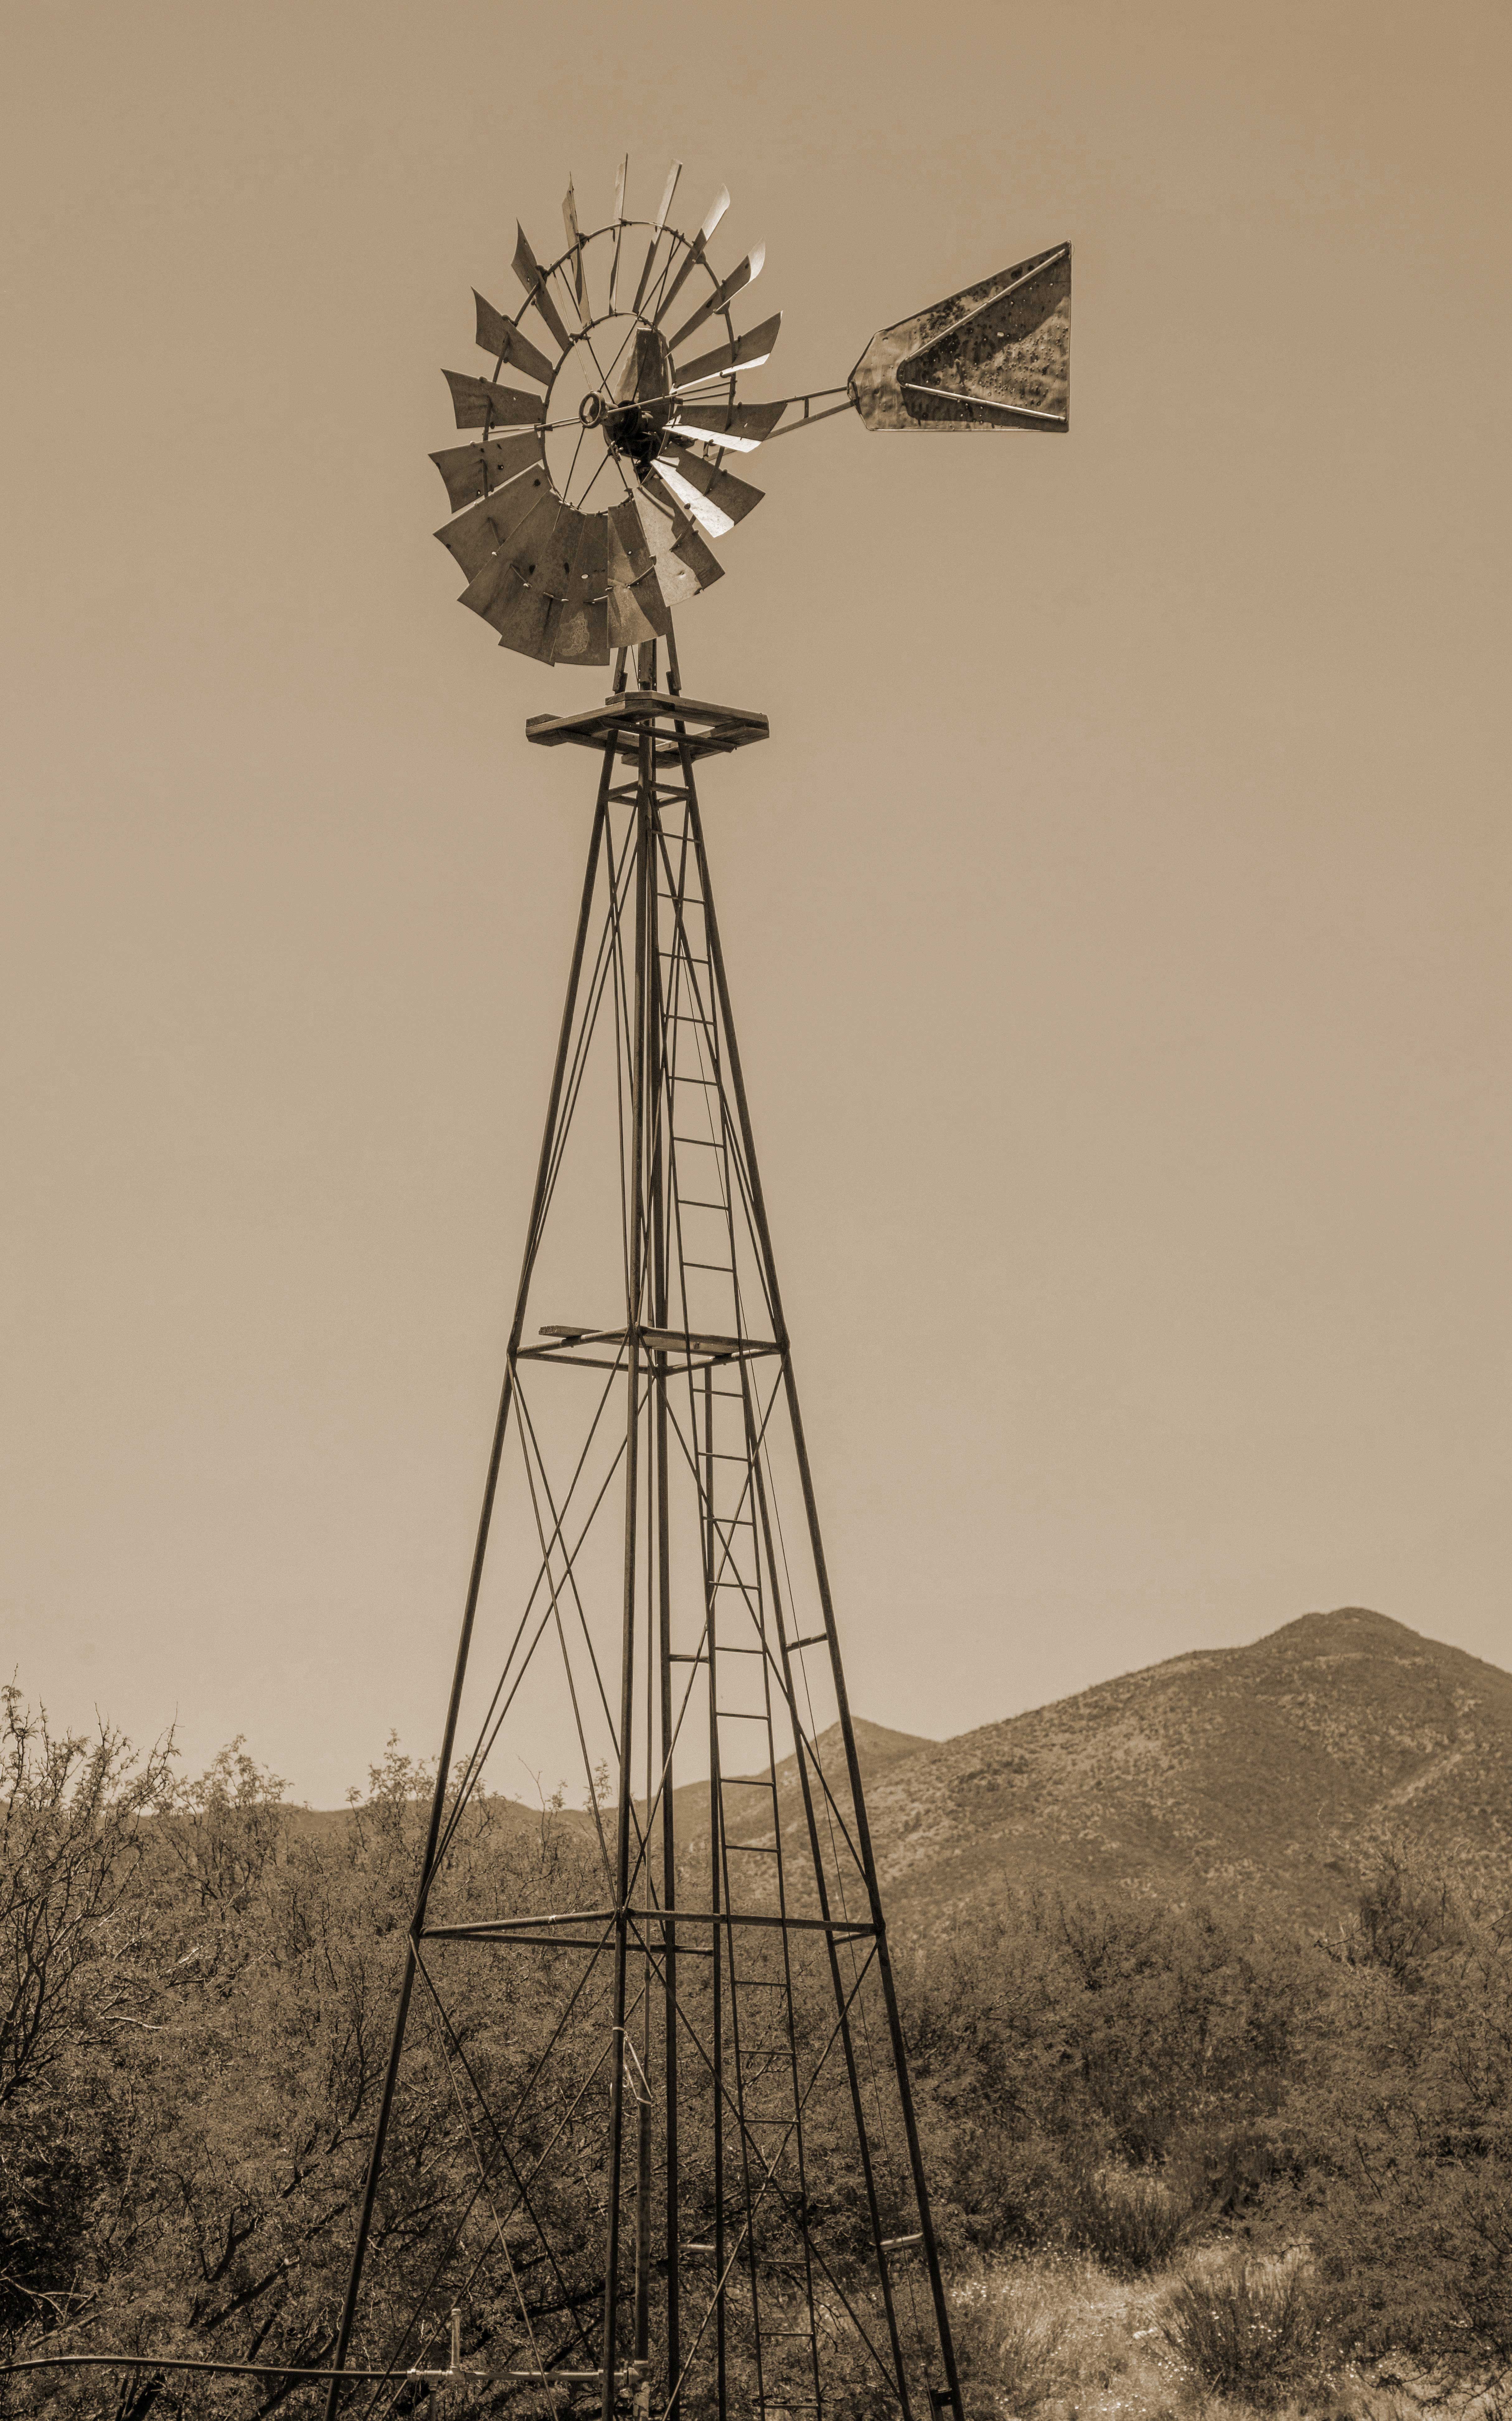 Windmill on the Beeline Highway